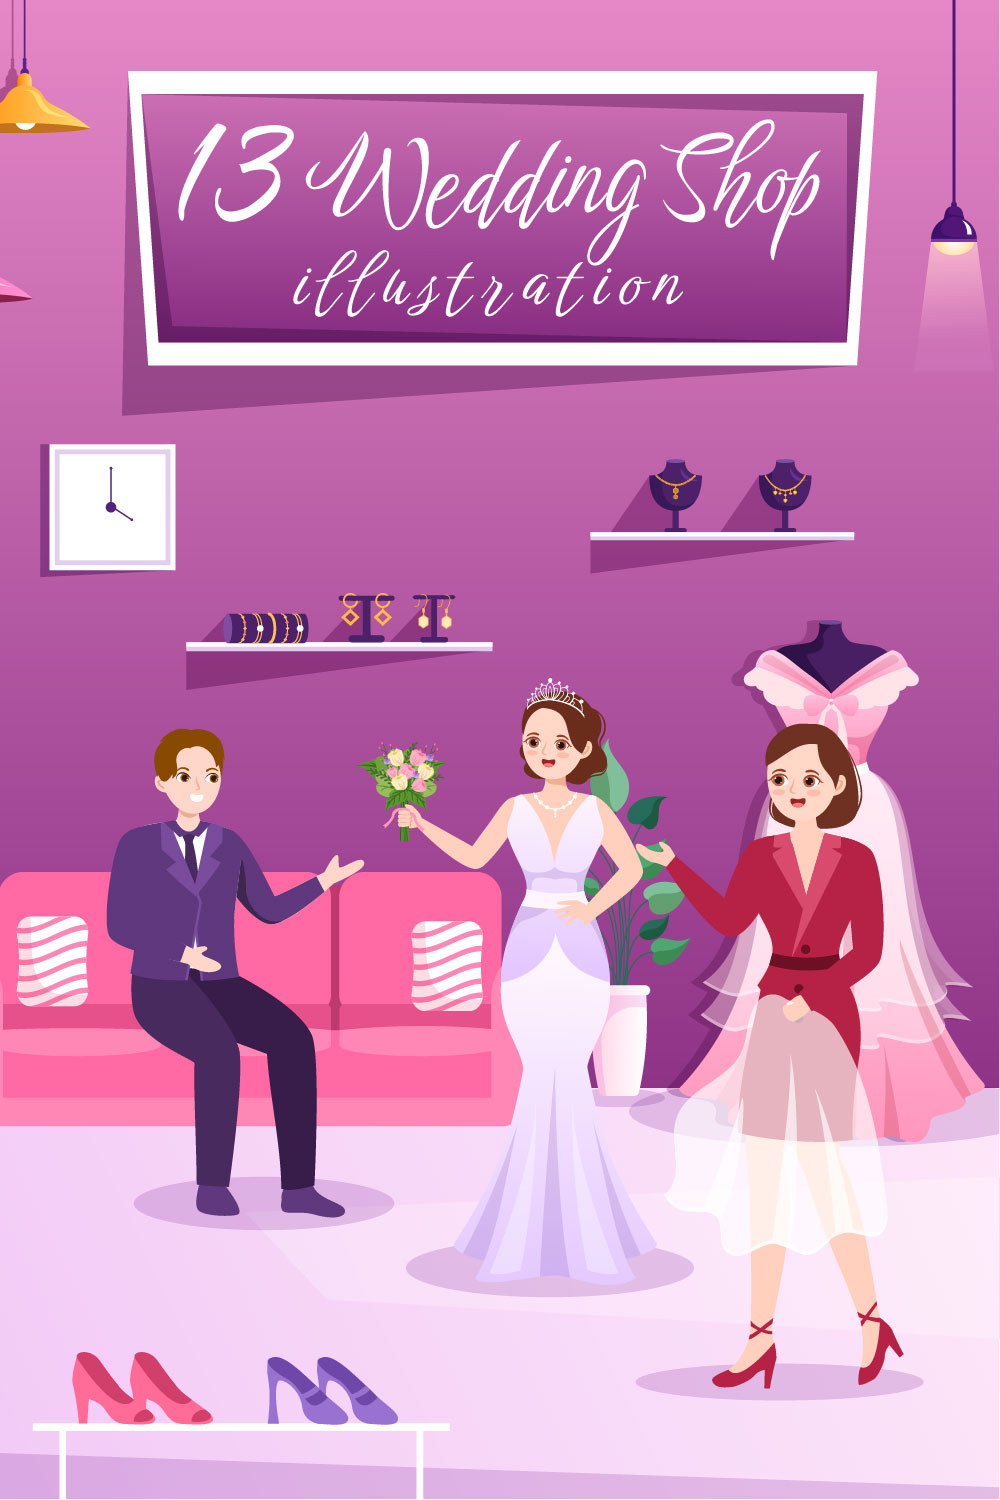 Wedding Shop Illustration pinterest image.